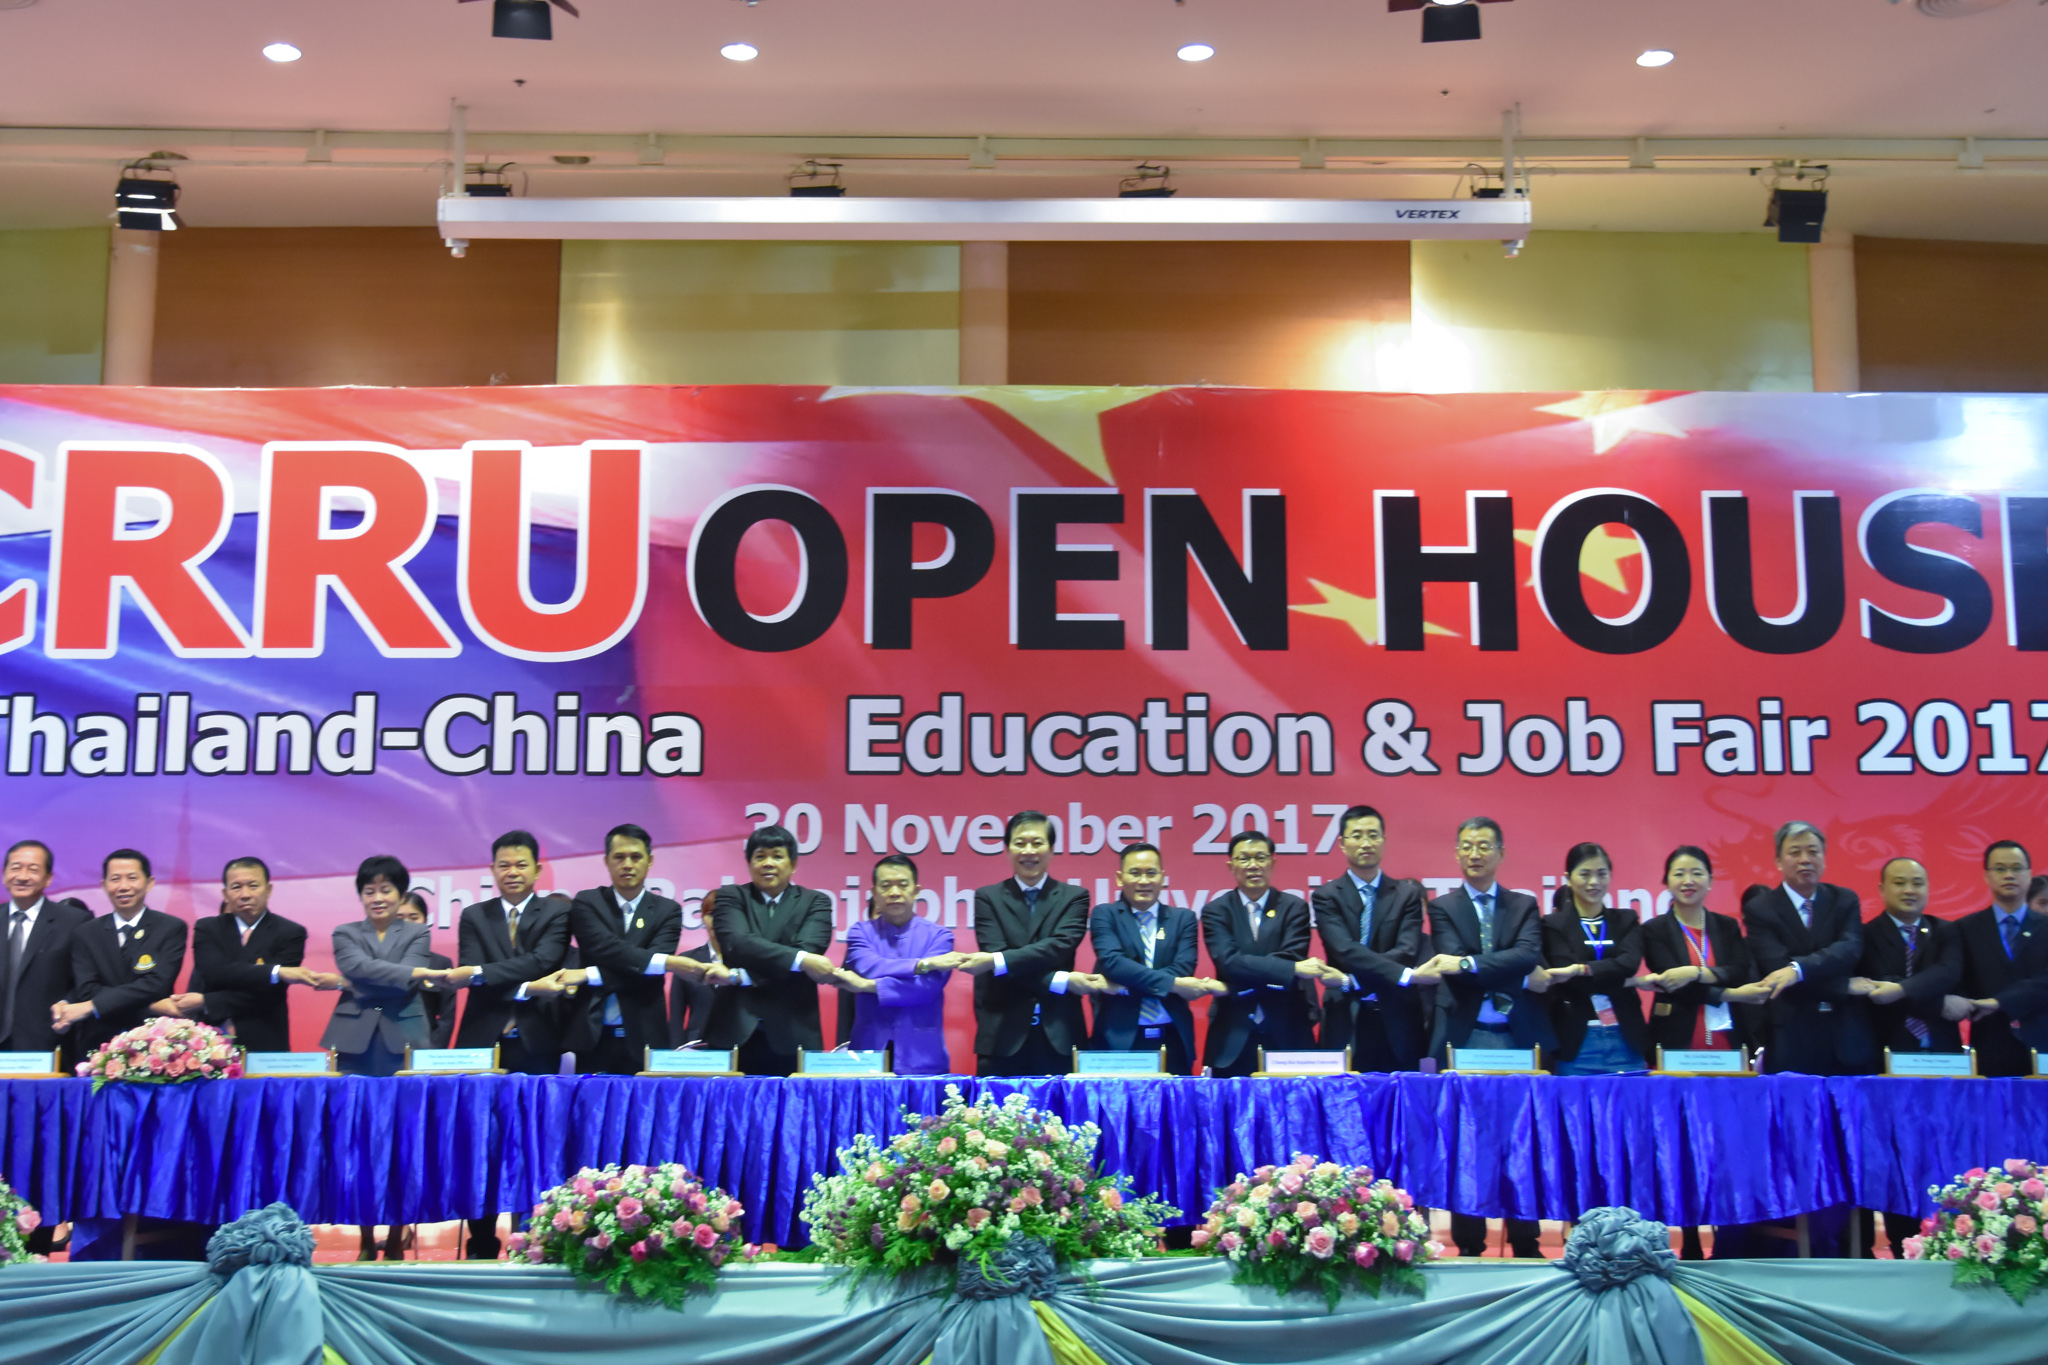 CRRU OPEN HOUSE Thailand - China Education & Job Fair 2017 30 November 2017 Chiang Rai Rajbhat University Thailand